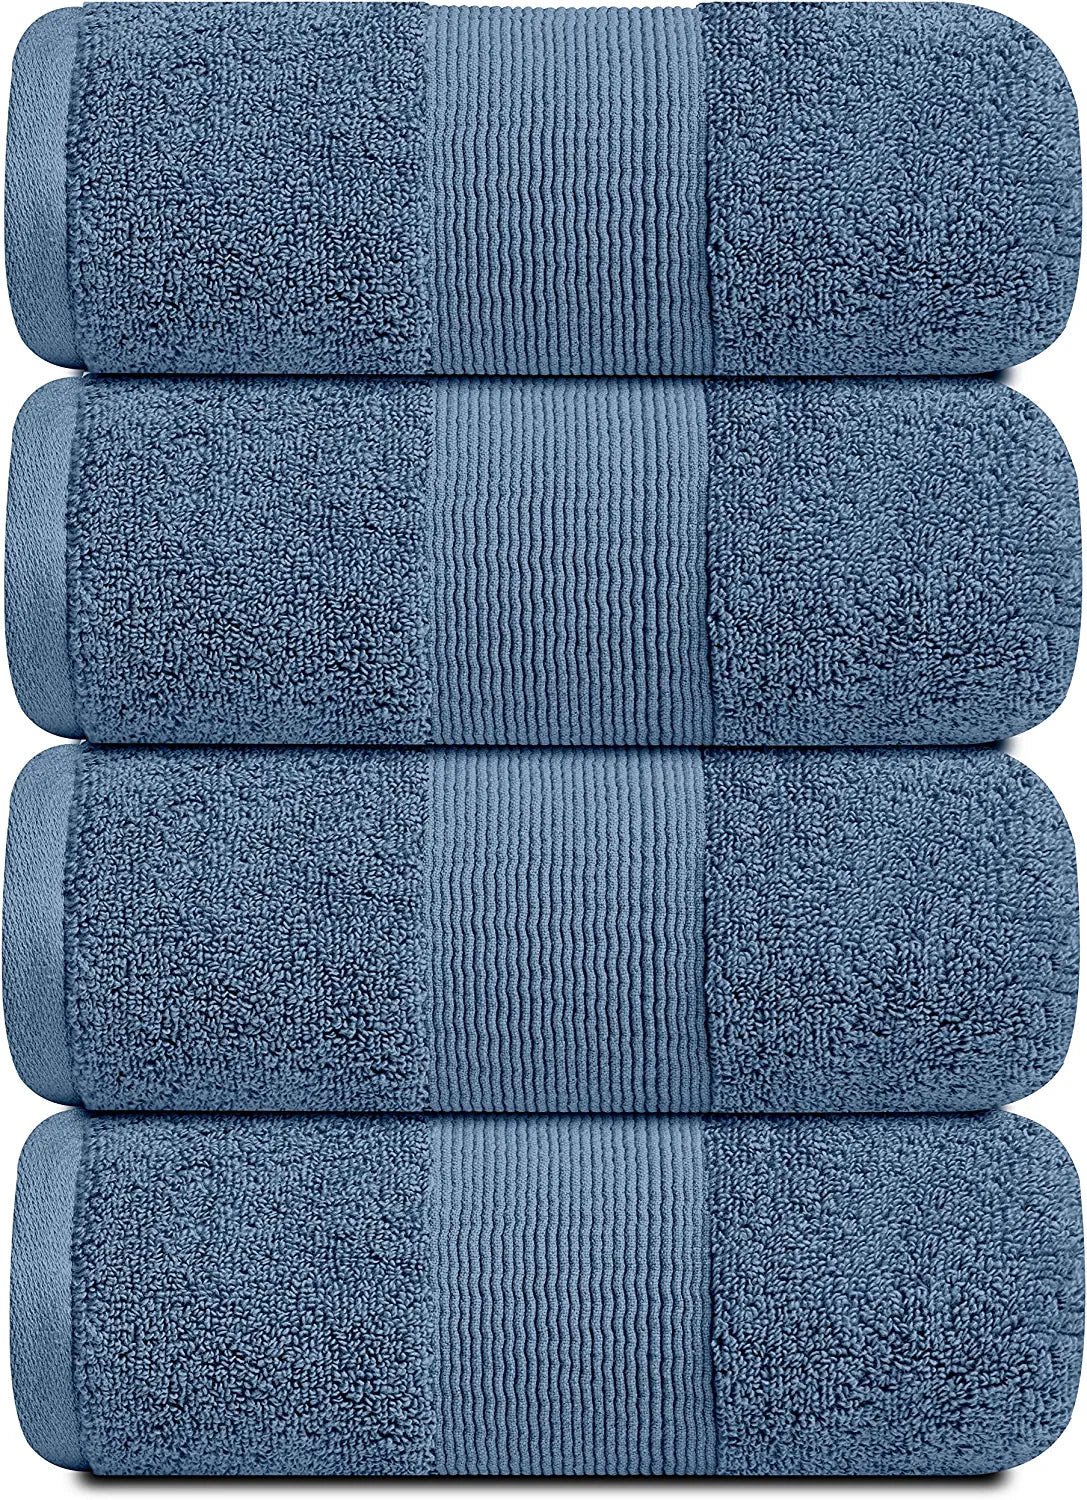 4pc Resort Collection Blue Bath Towels